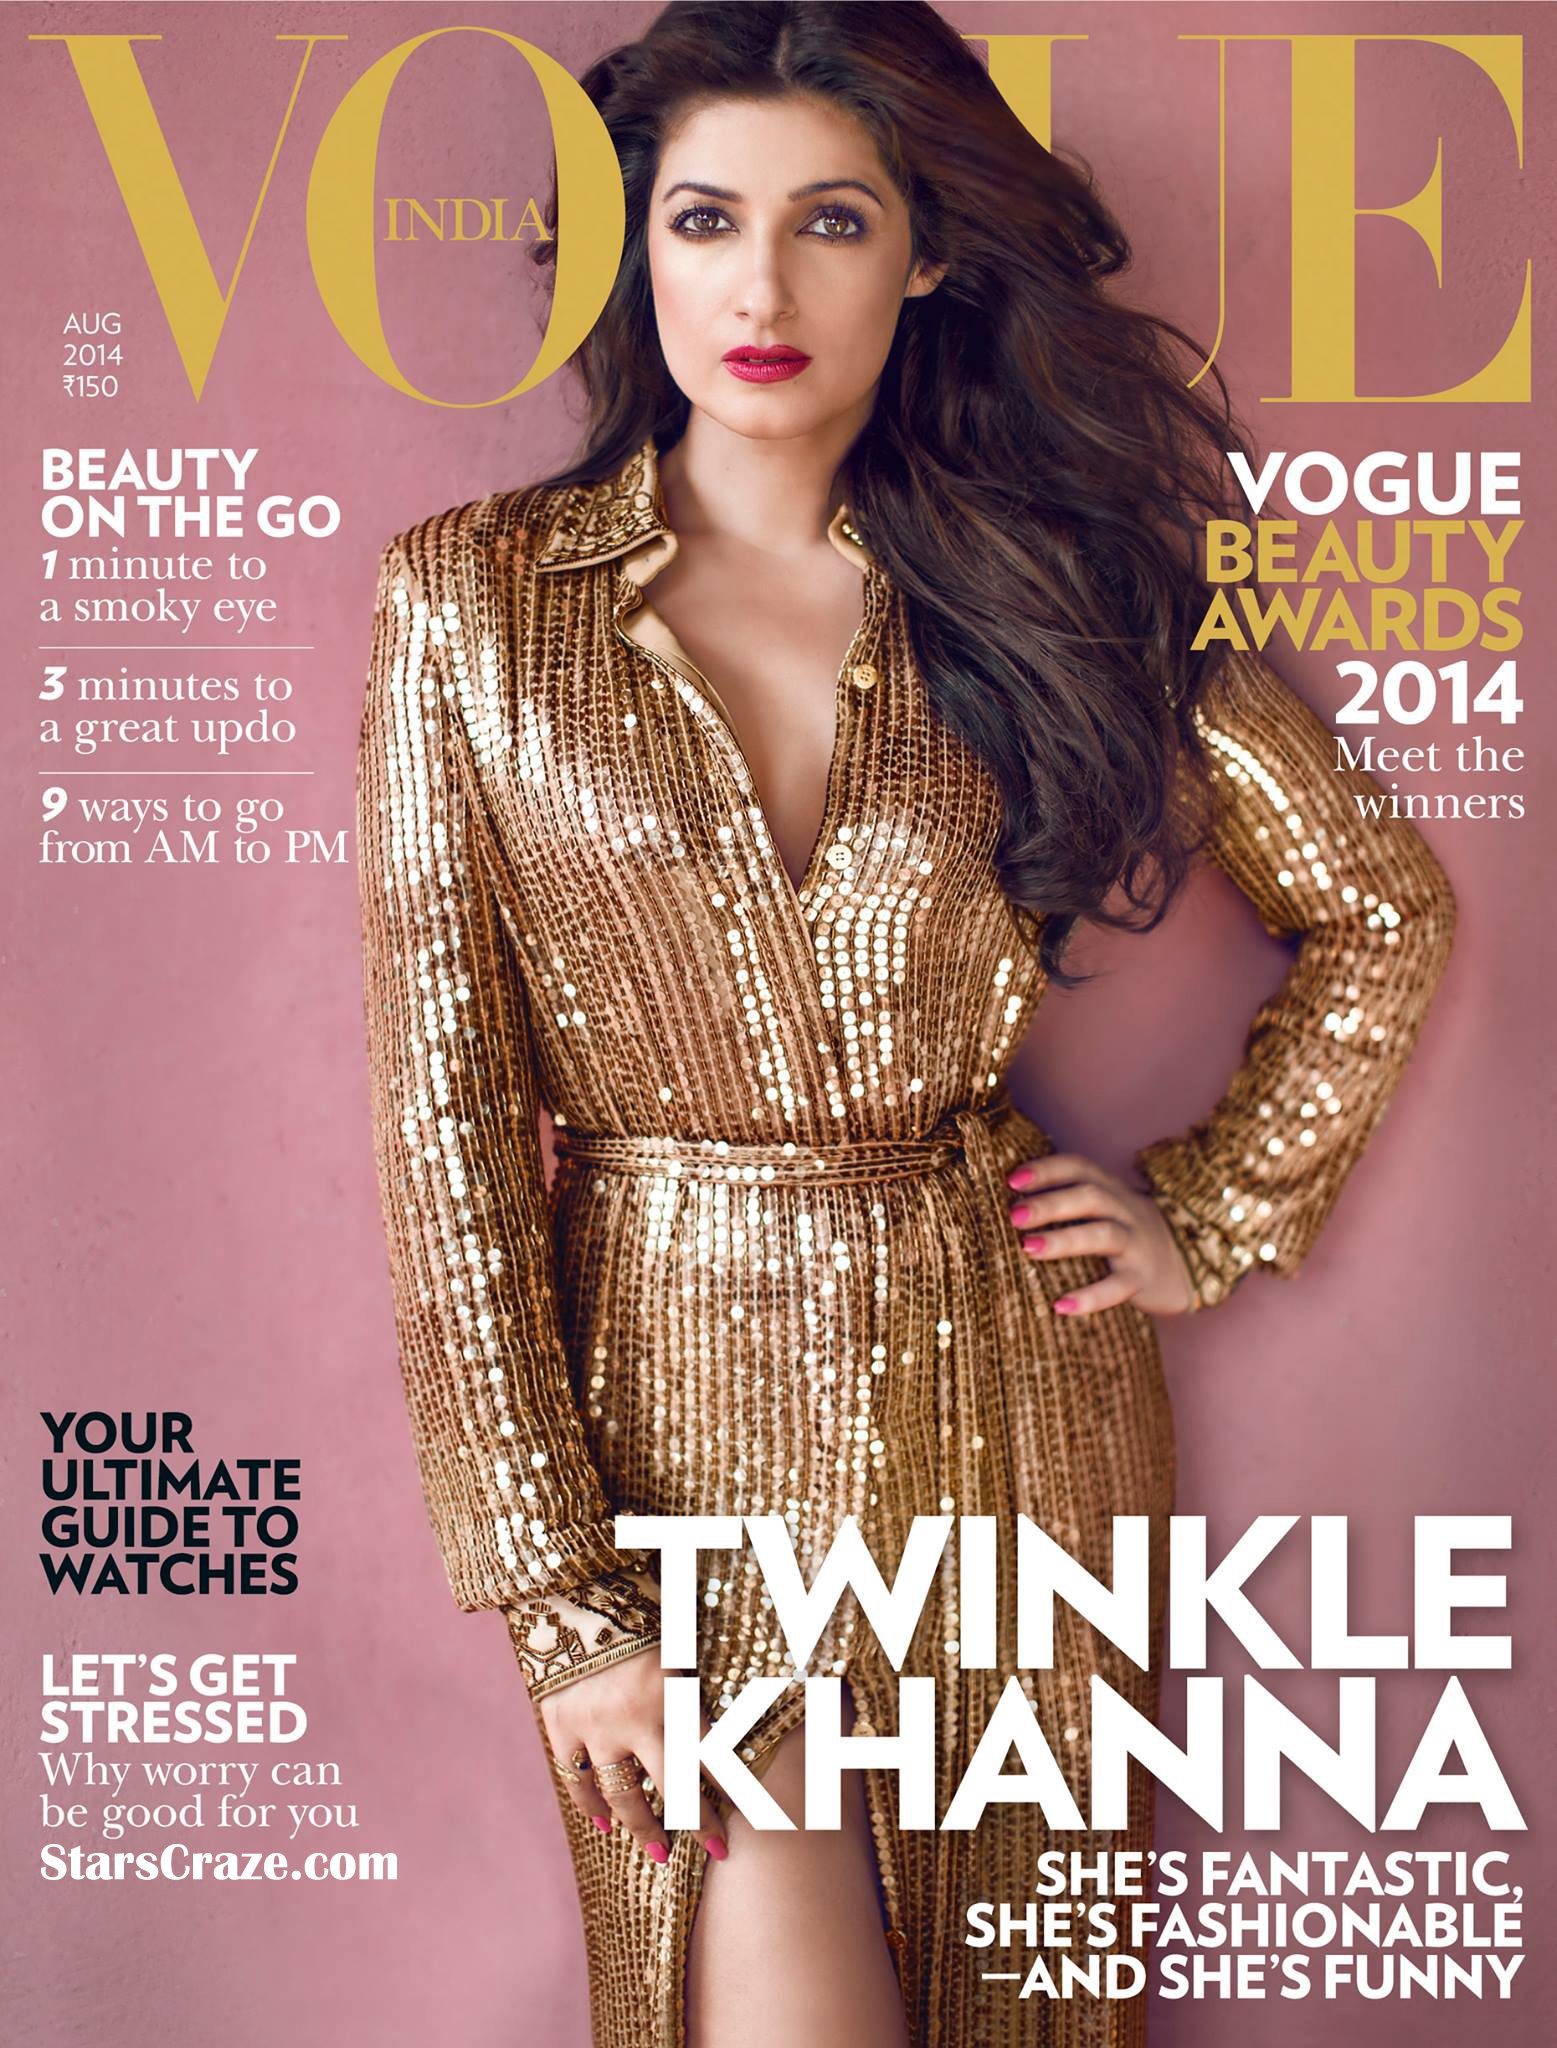 http://punjab2000.com/wp-content/uploads/2014/08/twinkle-khanna-vogue-cover-magazine-starscraze.jpg